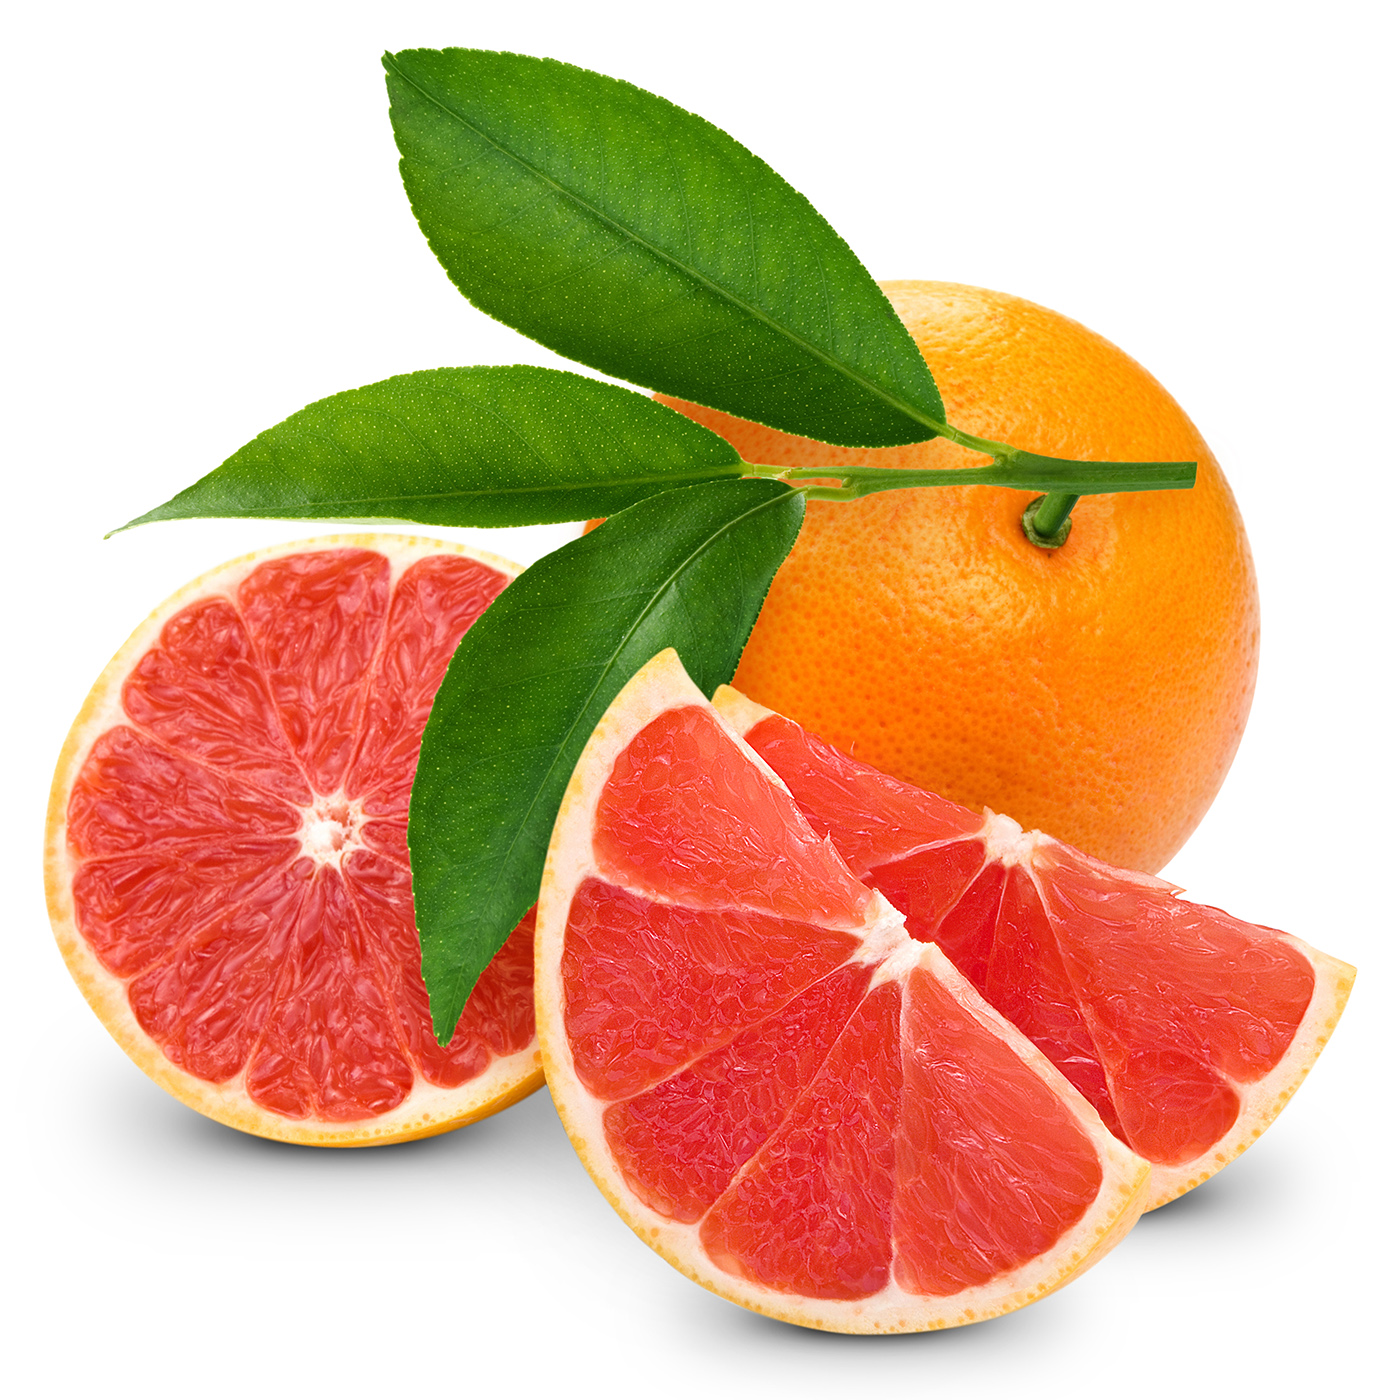 Fresh oranges cut 50716 - Fruits and vegetables - Harvest season